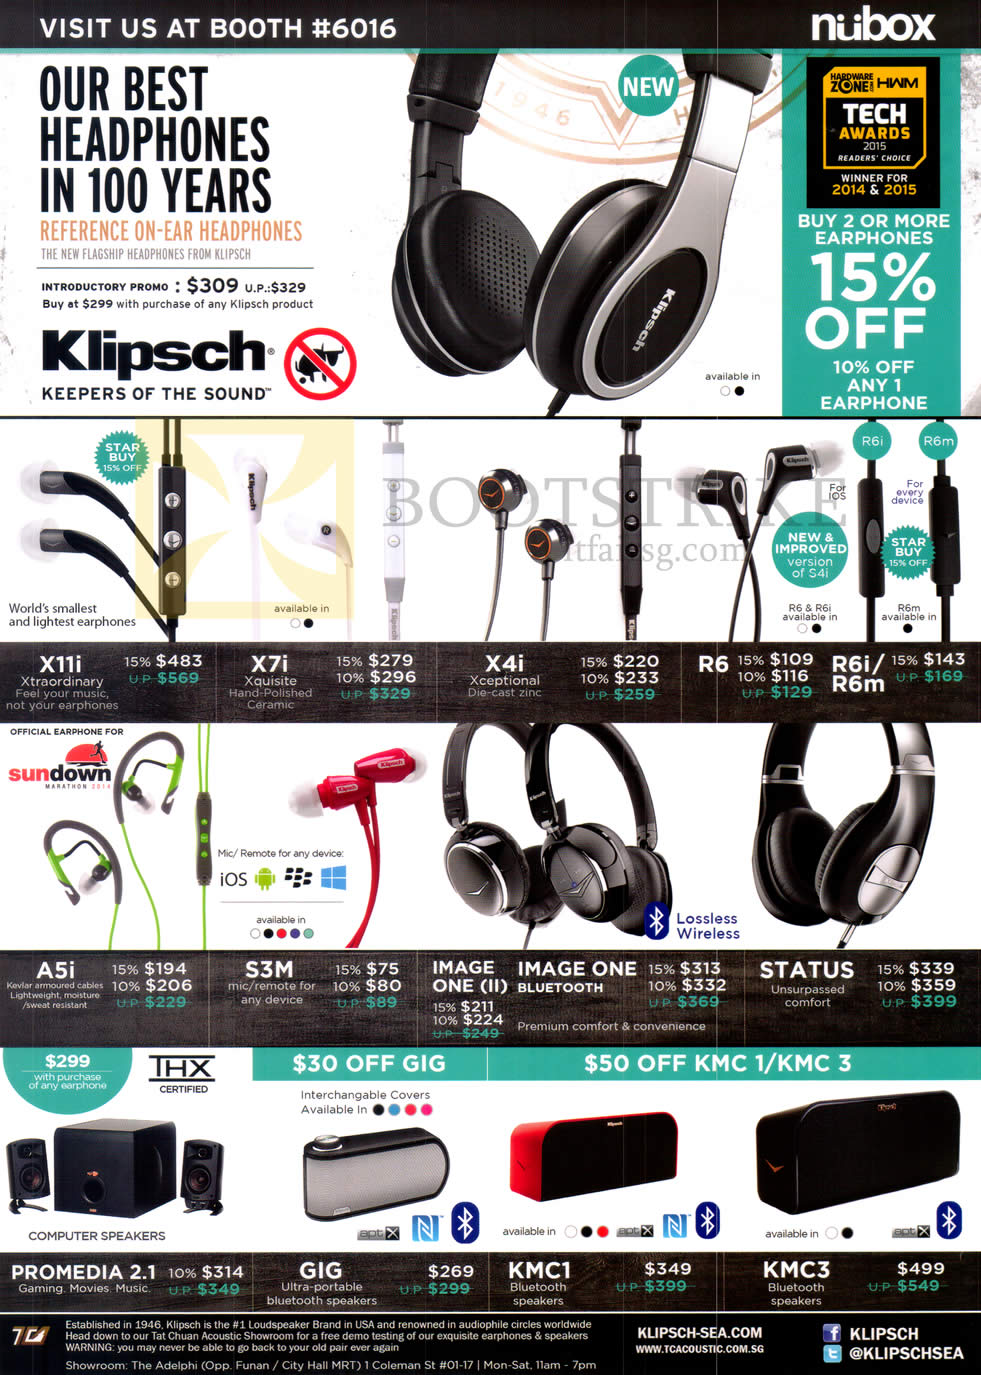 PC SHOW 2015 price list image brochure of Nubox Klipsch Headphones, Earphones, Speakers, X11i, X7i, X4i, R6, R6i, R6m, A5i, S3M, Image One II, Image One Bluetooth, Status, Promedia 2.1, Gig, KMC1, KMC3